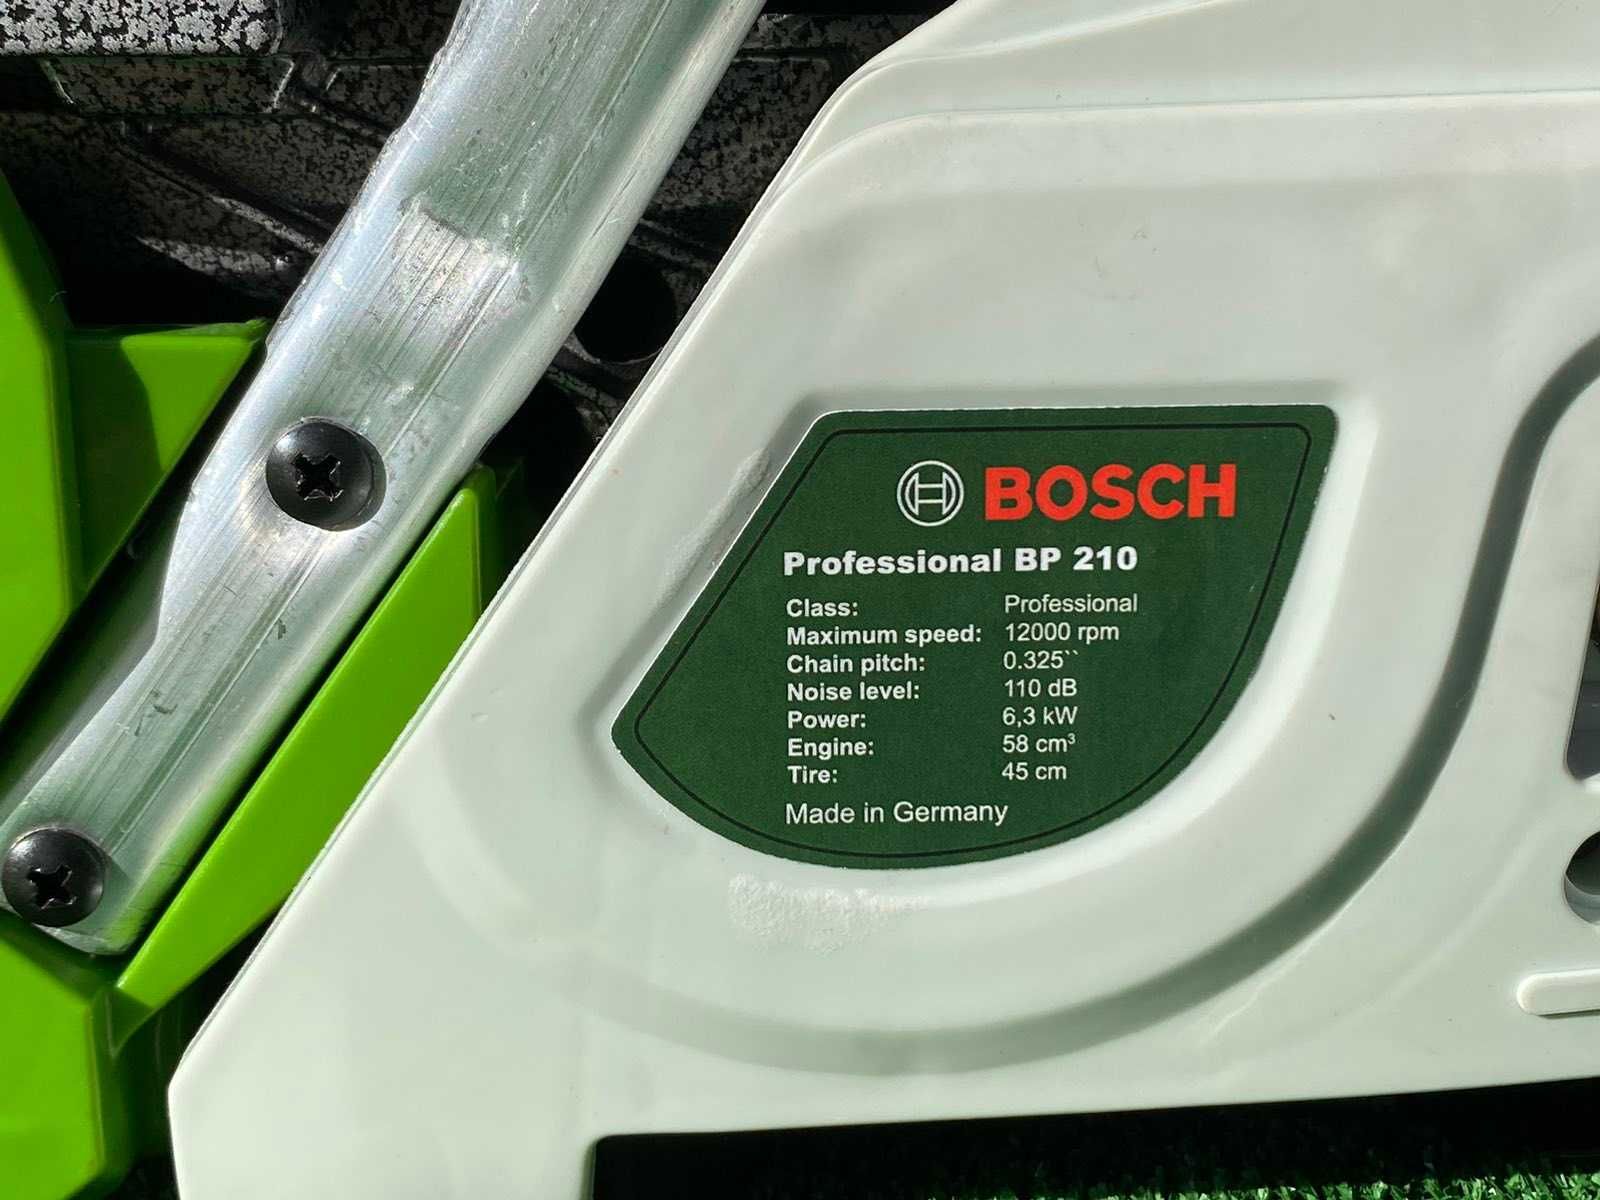 Професійна бензопила BOSCH BP 210 (6.3 кВт) Бош BP 210